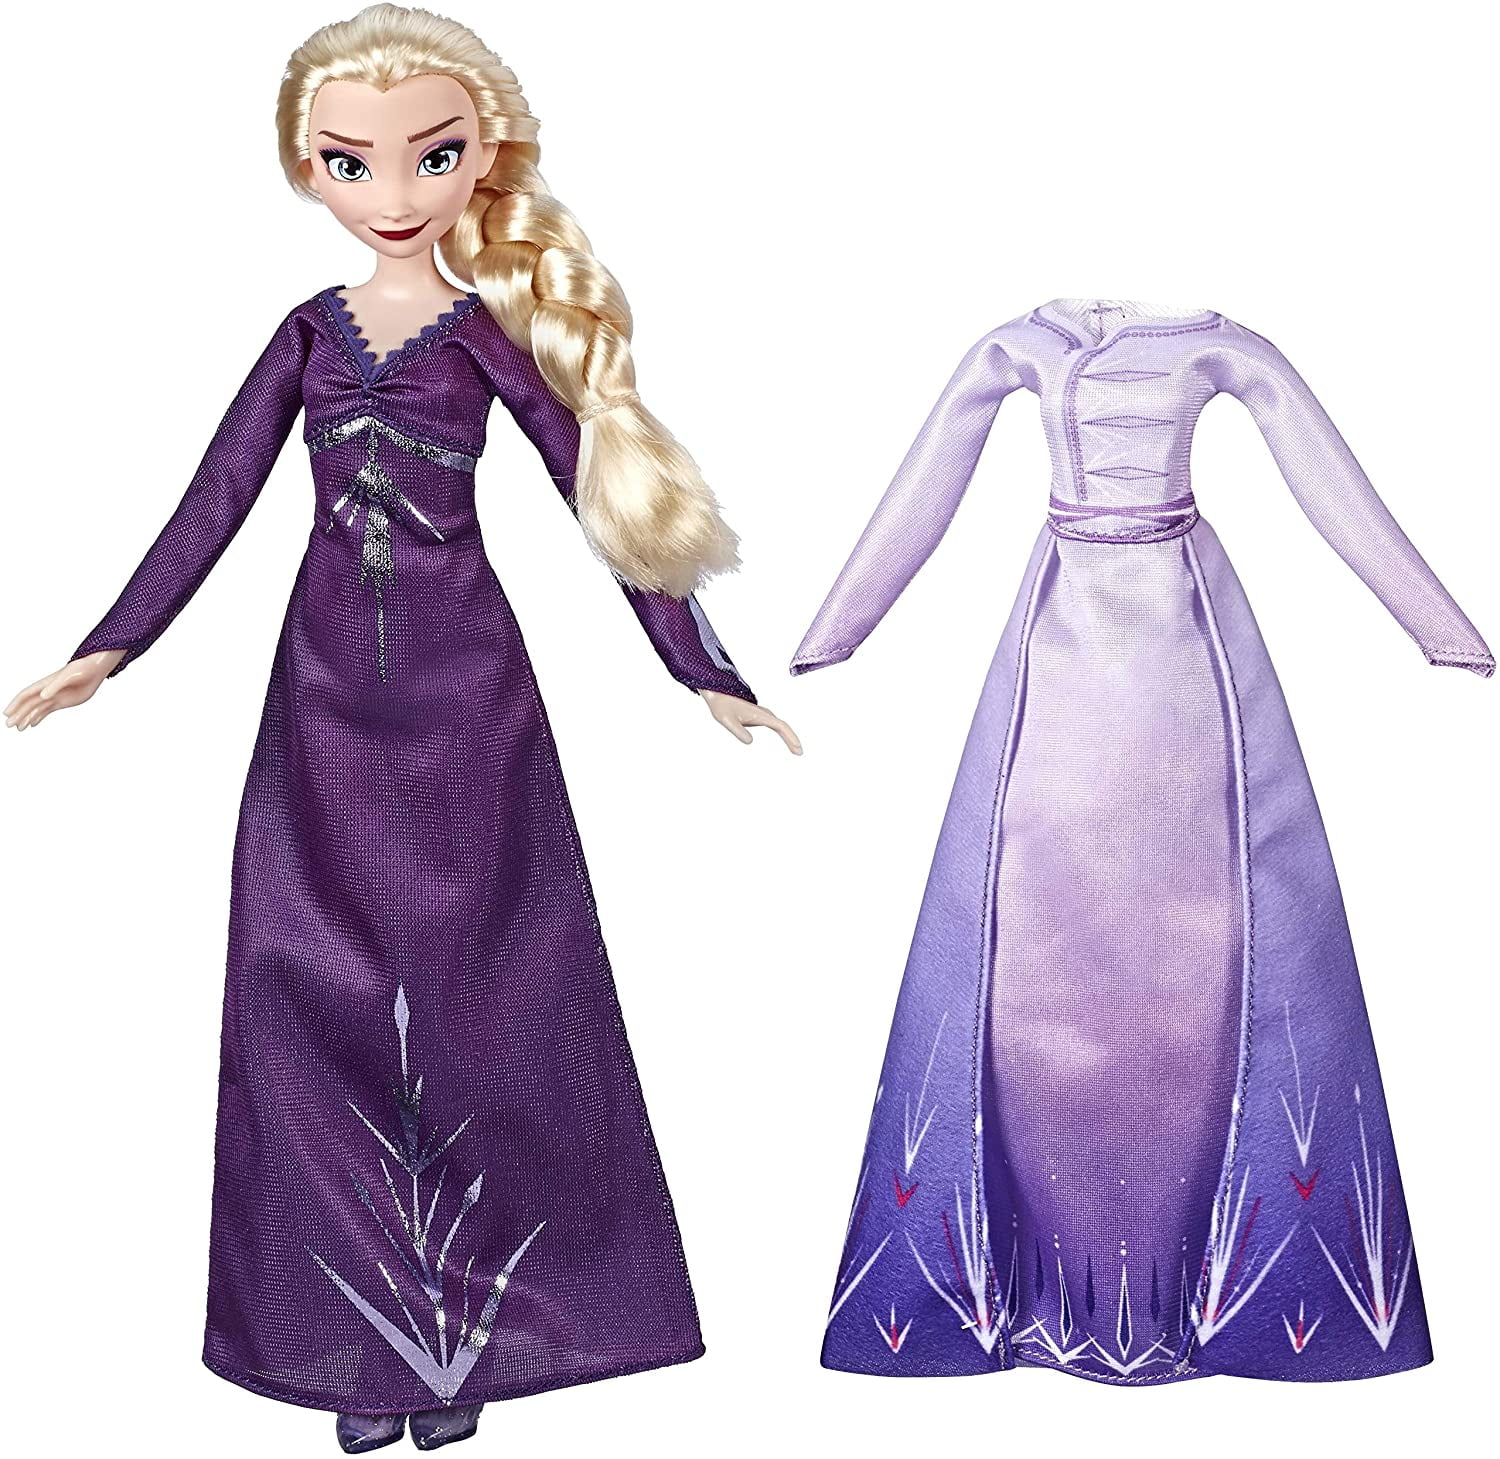 Disney Frozen 2 Arendelle Elsa Doll Includes Dress, Nightgown and Shoes -  Walmart.com